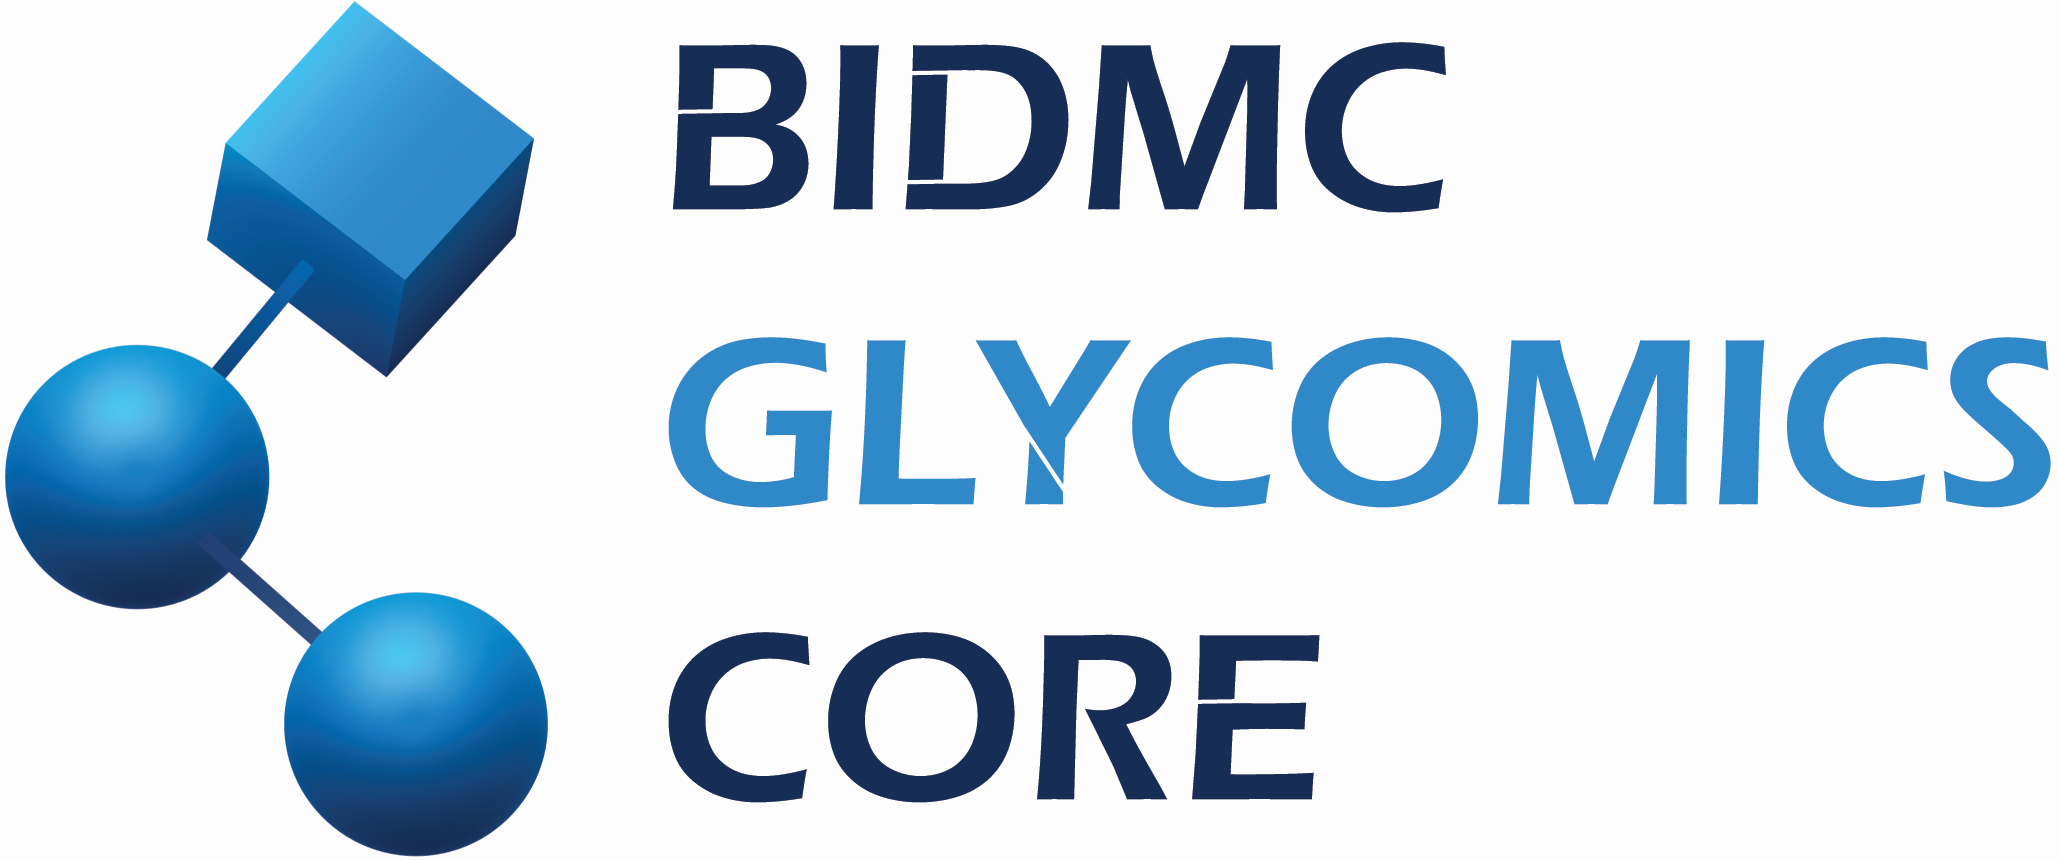 Glycomics Core - BIDMC